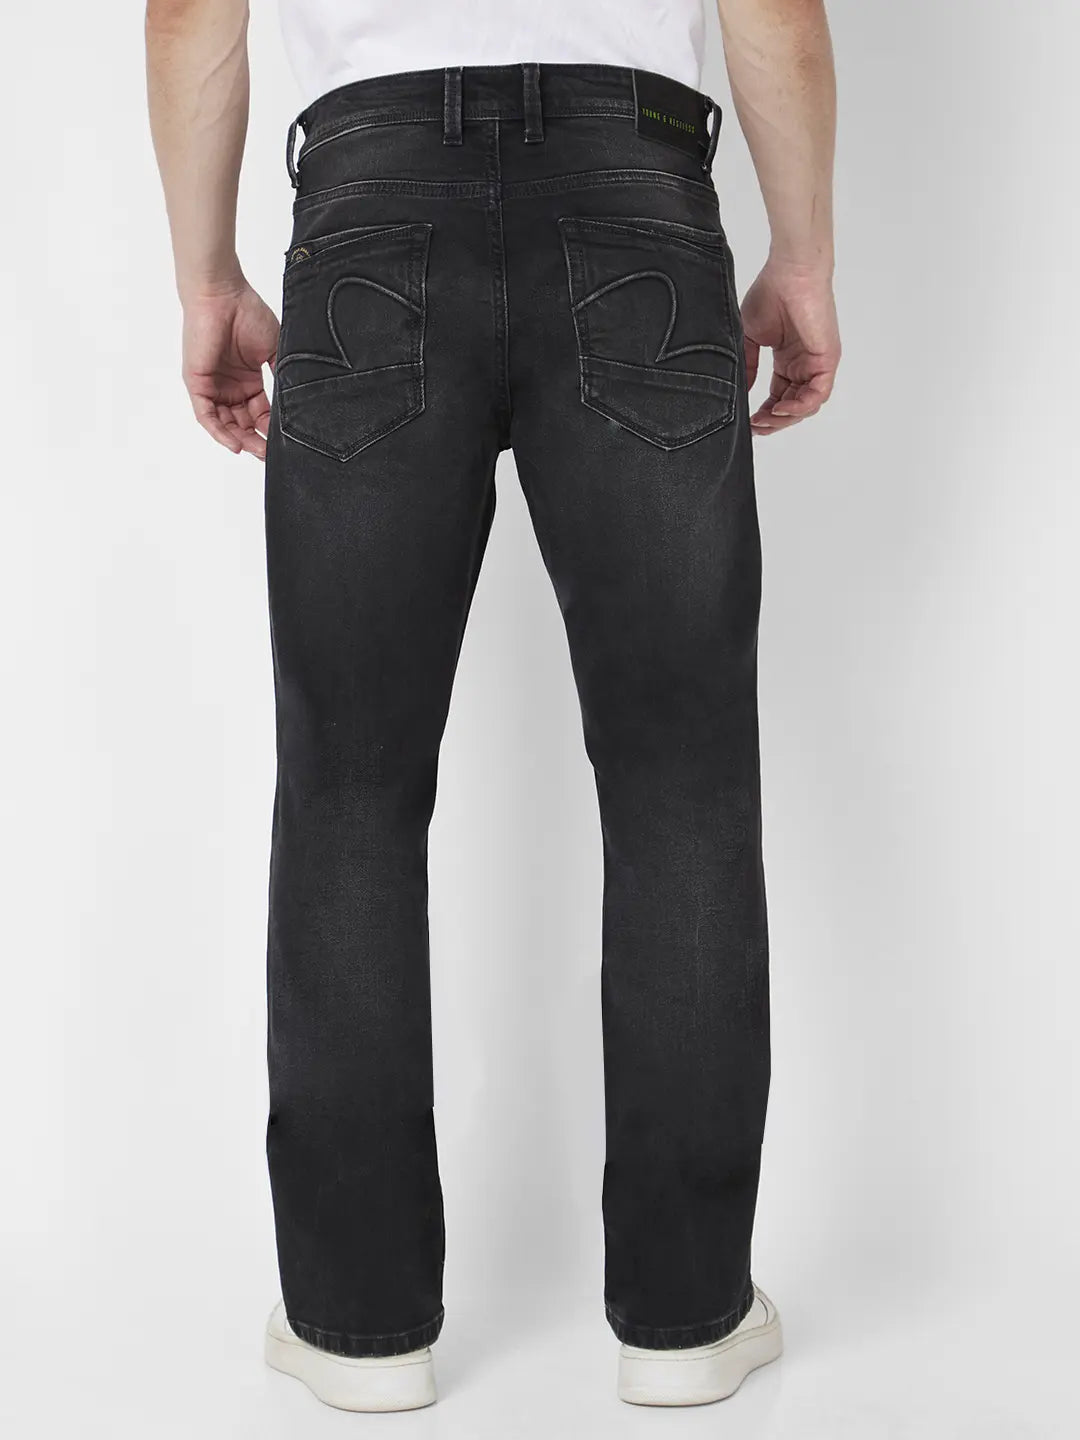 Buy Online|Spykar Men Carbon Black Cotton Comfort Fit Regular Length ...